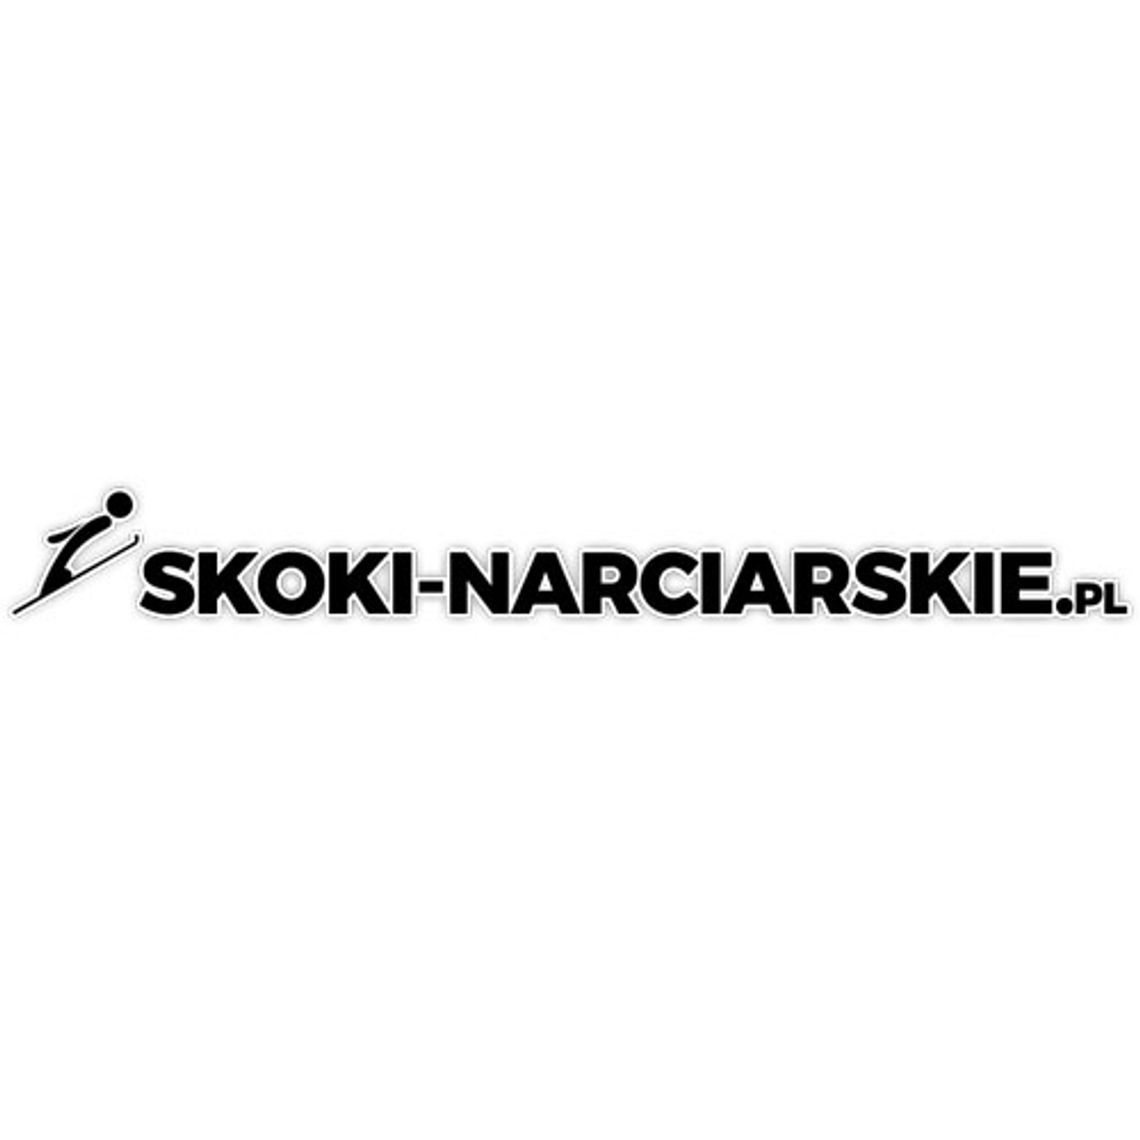 Skoki narciarskie na żywo - Skoki-narciarskie.pl